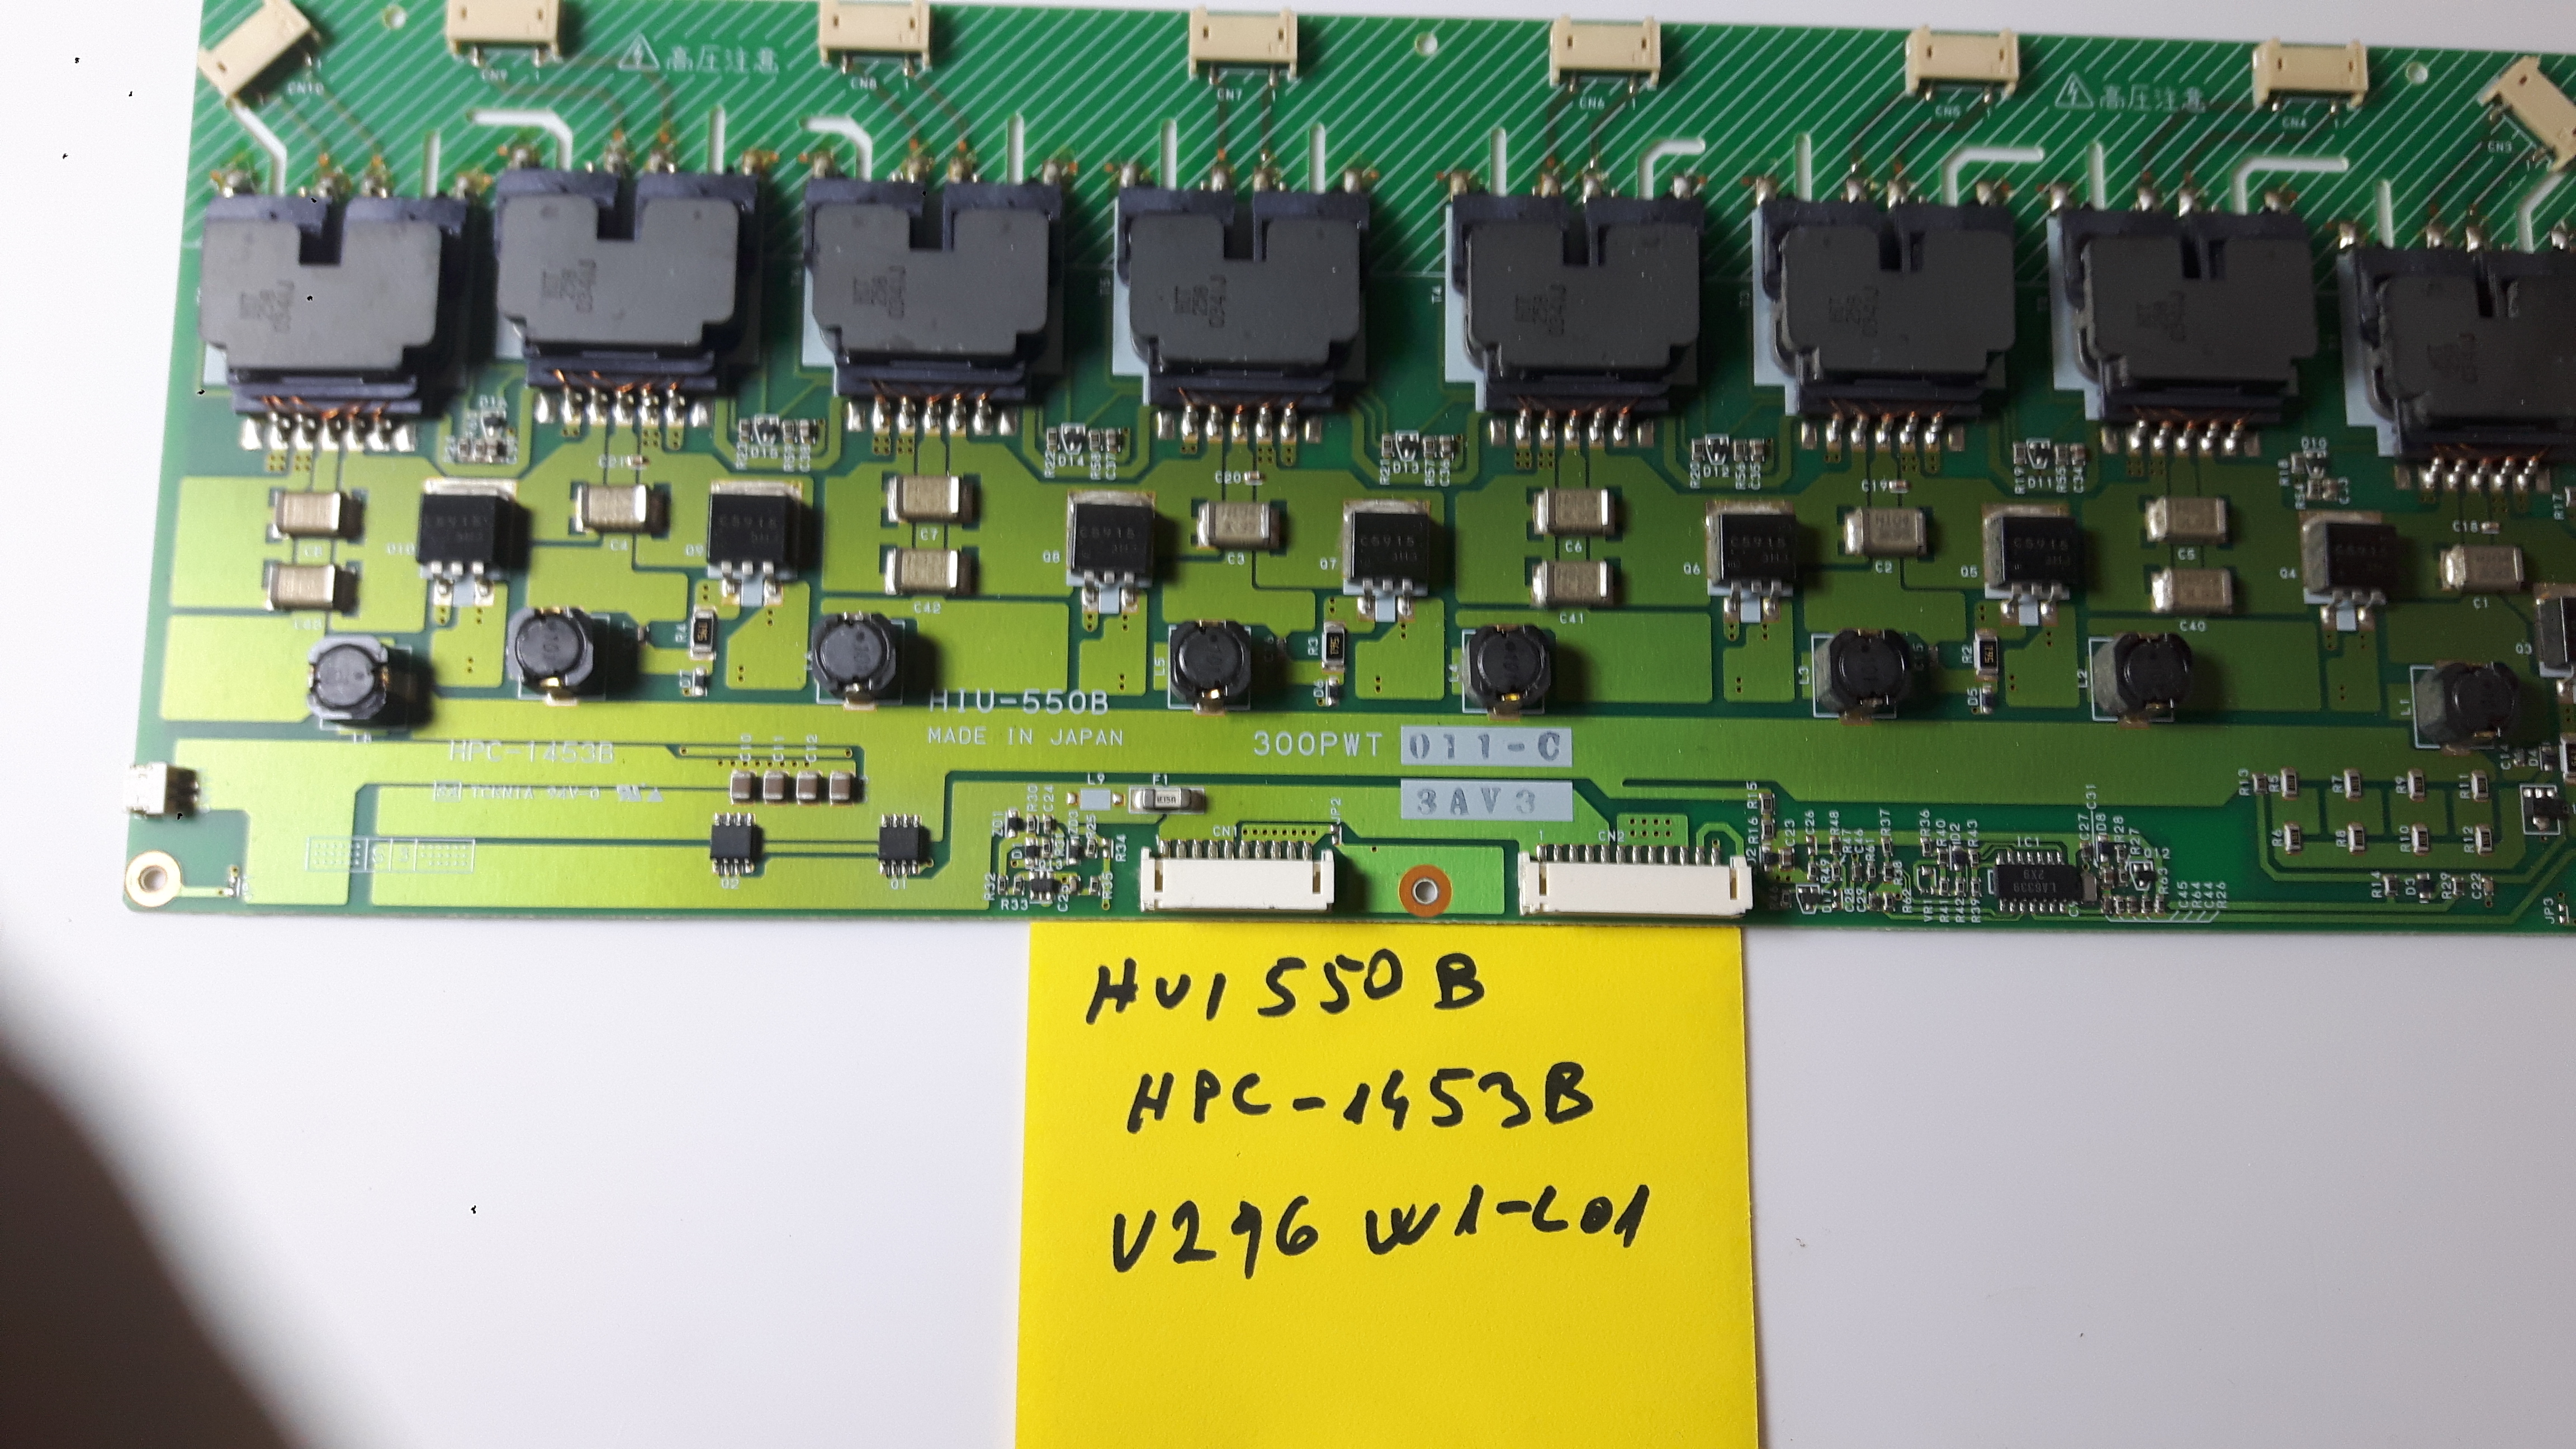 HUI550B  HPC-1453B  V296W1-L01